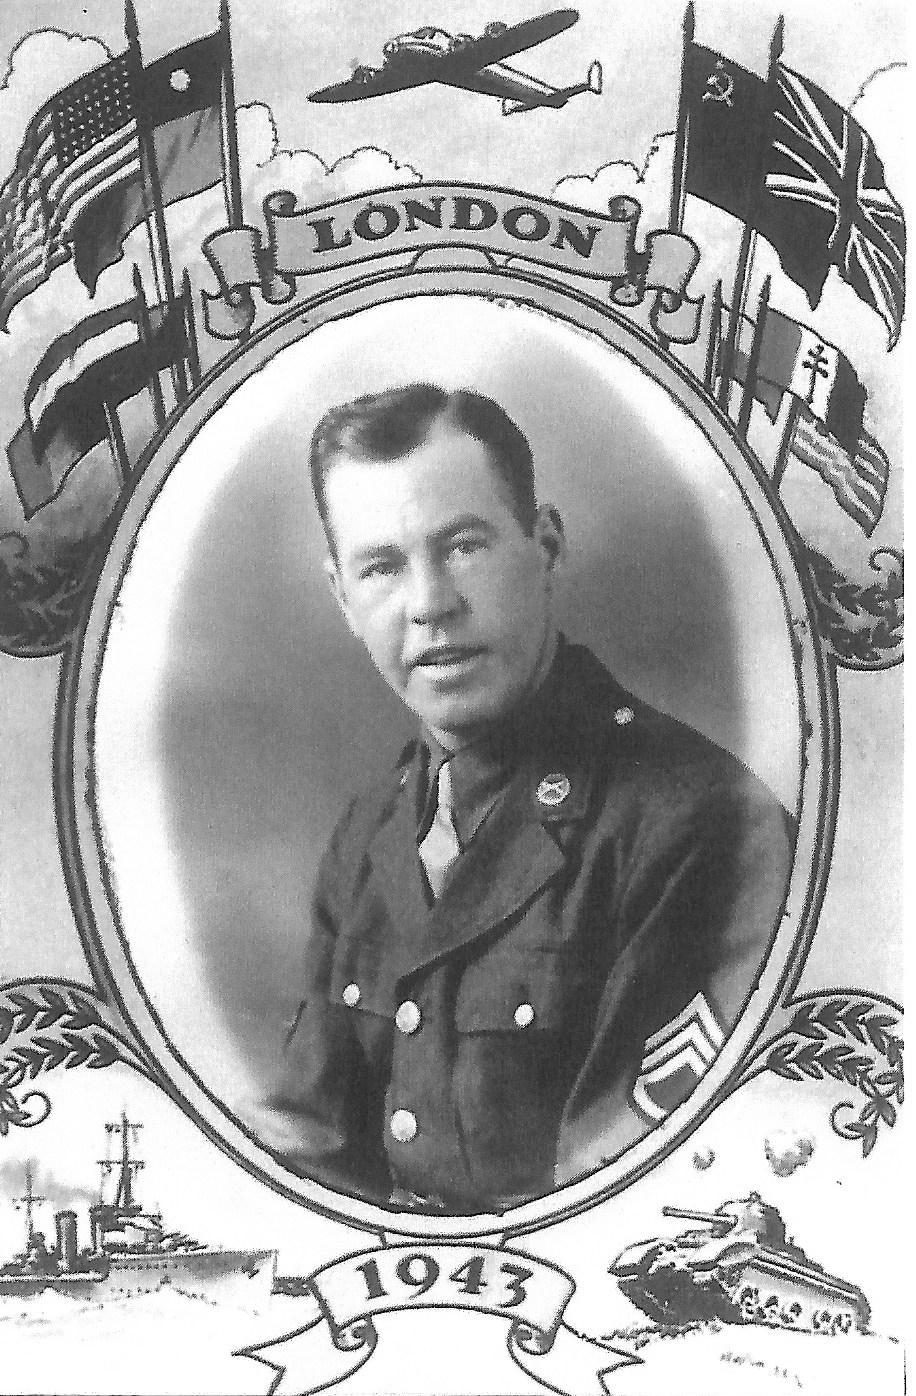 Meester Sergeant Everett S. Thomas